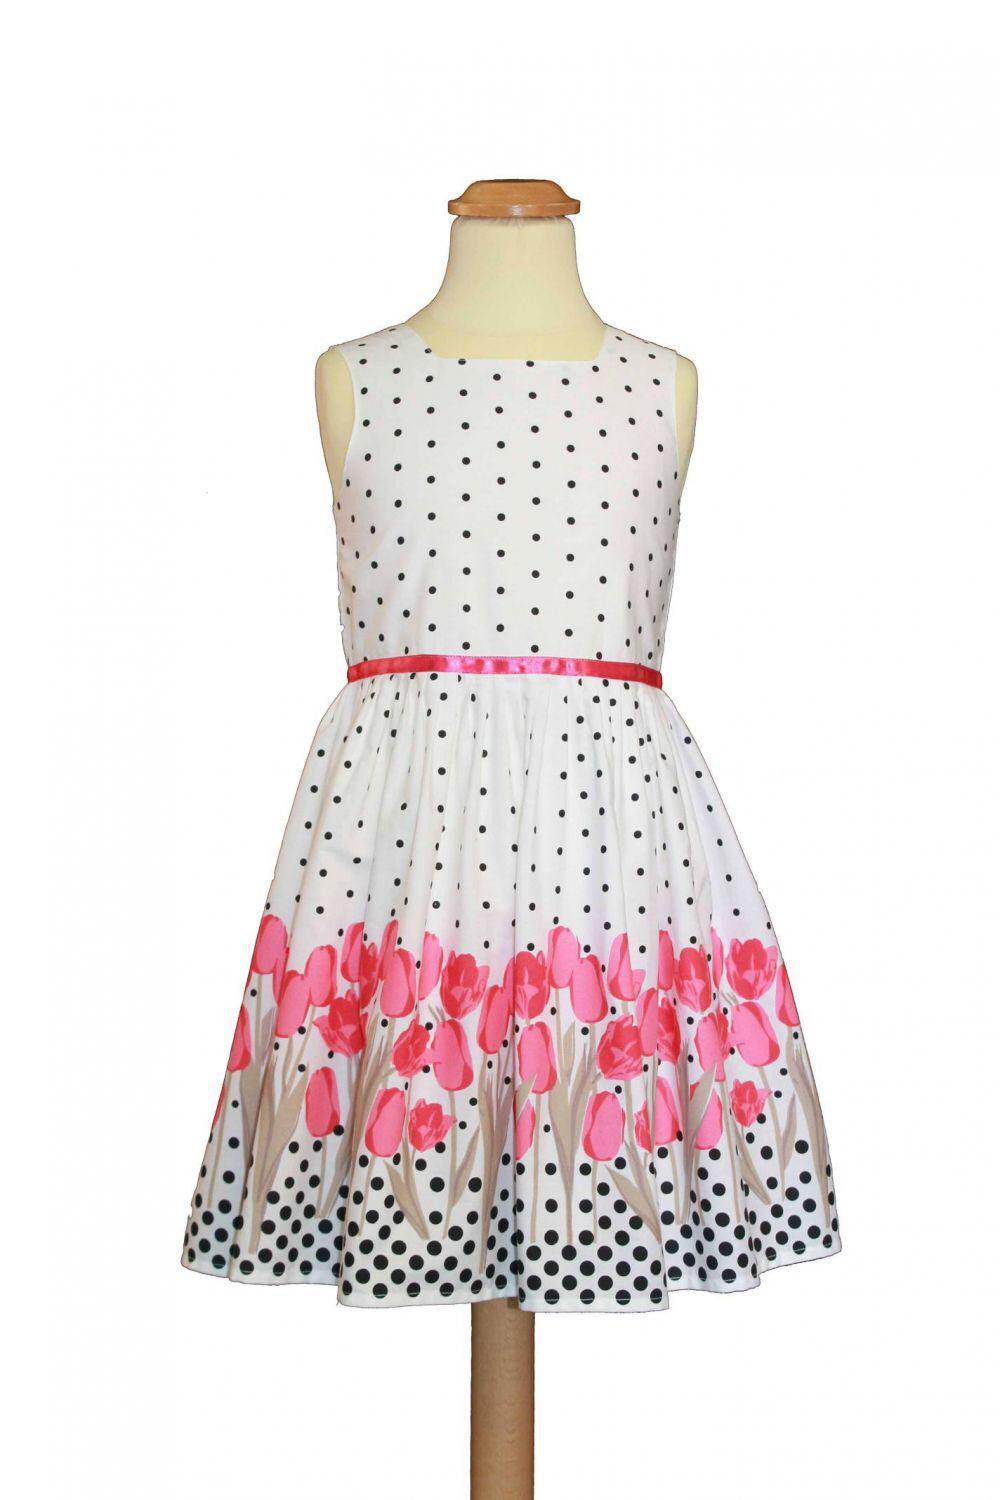 Sommerkleid Mädchen Kleid Tulpen pink